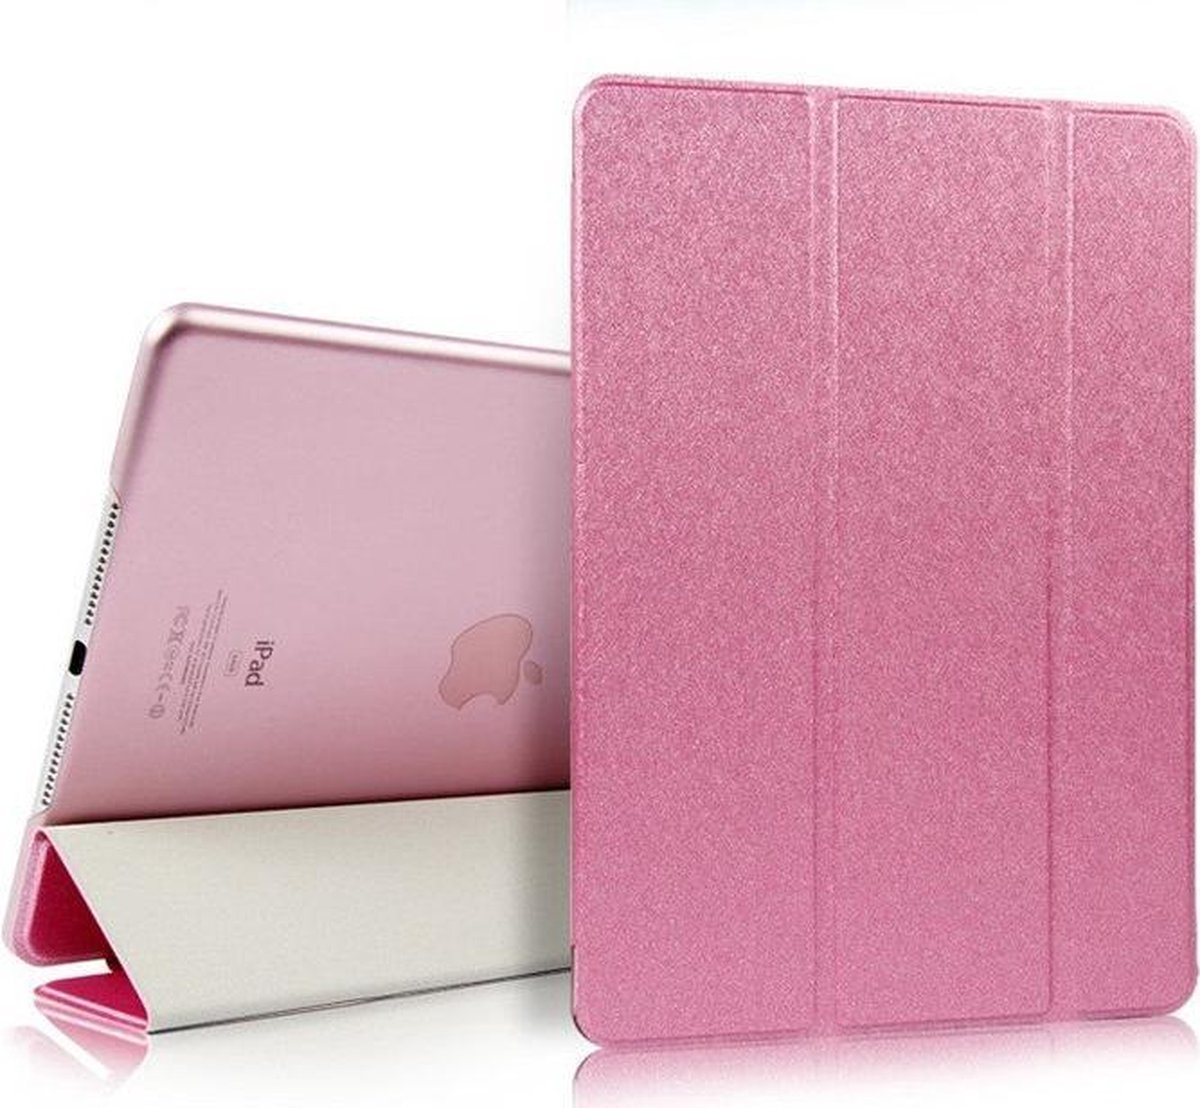 iPad 2018 Smart Cover Case - Texture Roze